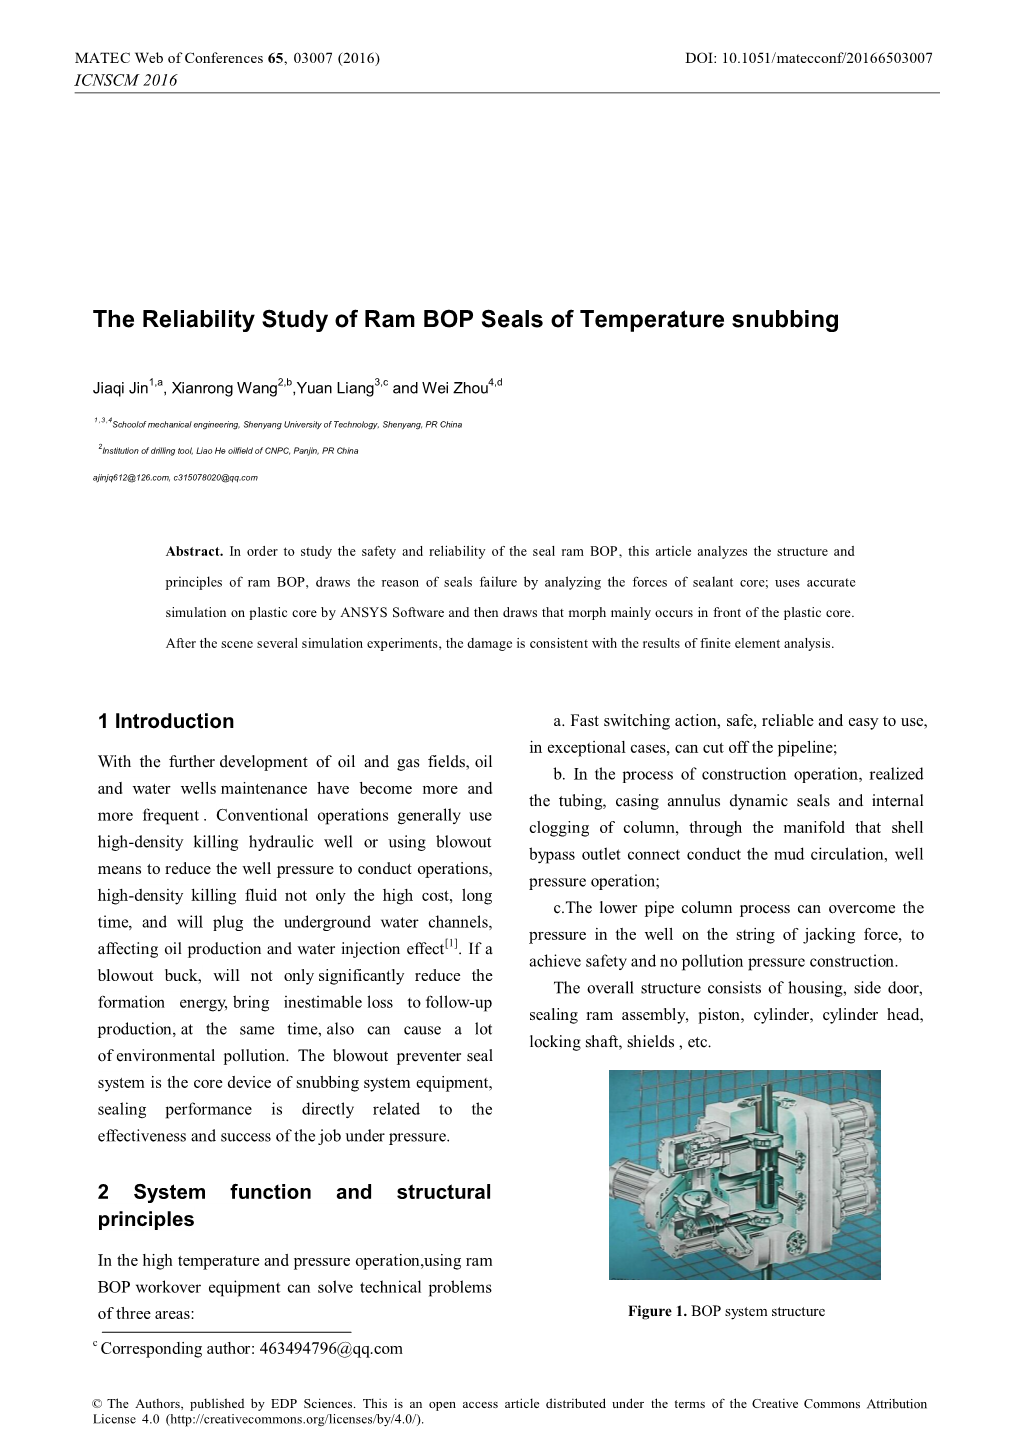 The Reliability Study of Ram BOP Seals of Temperature Snubbing